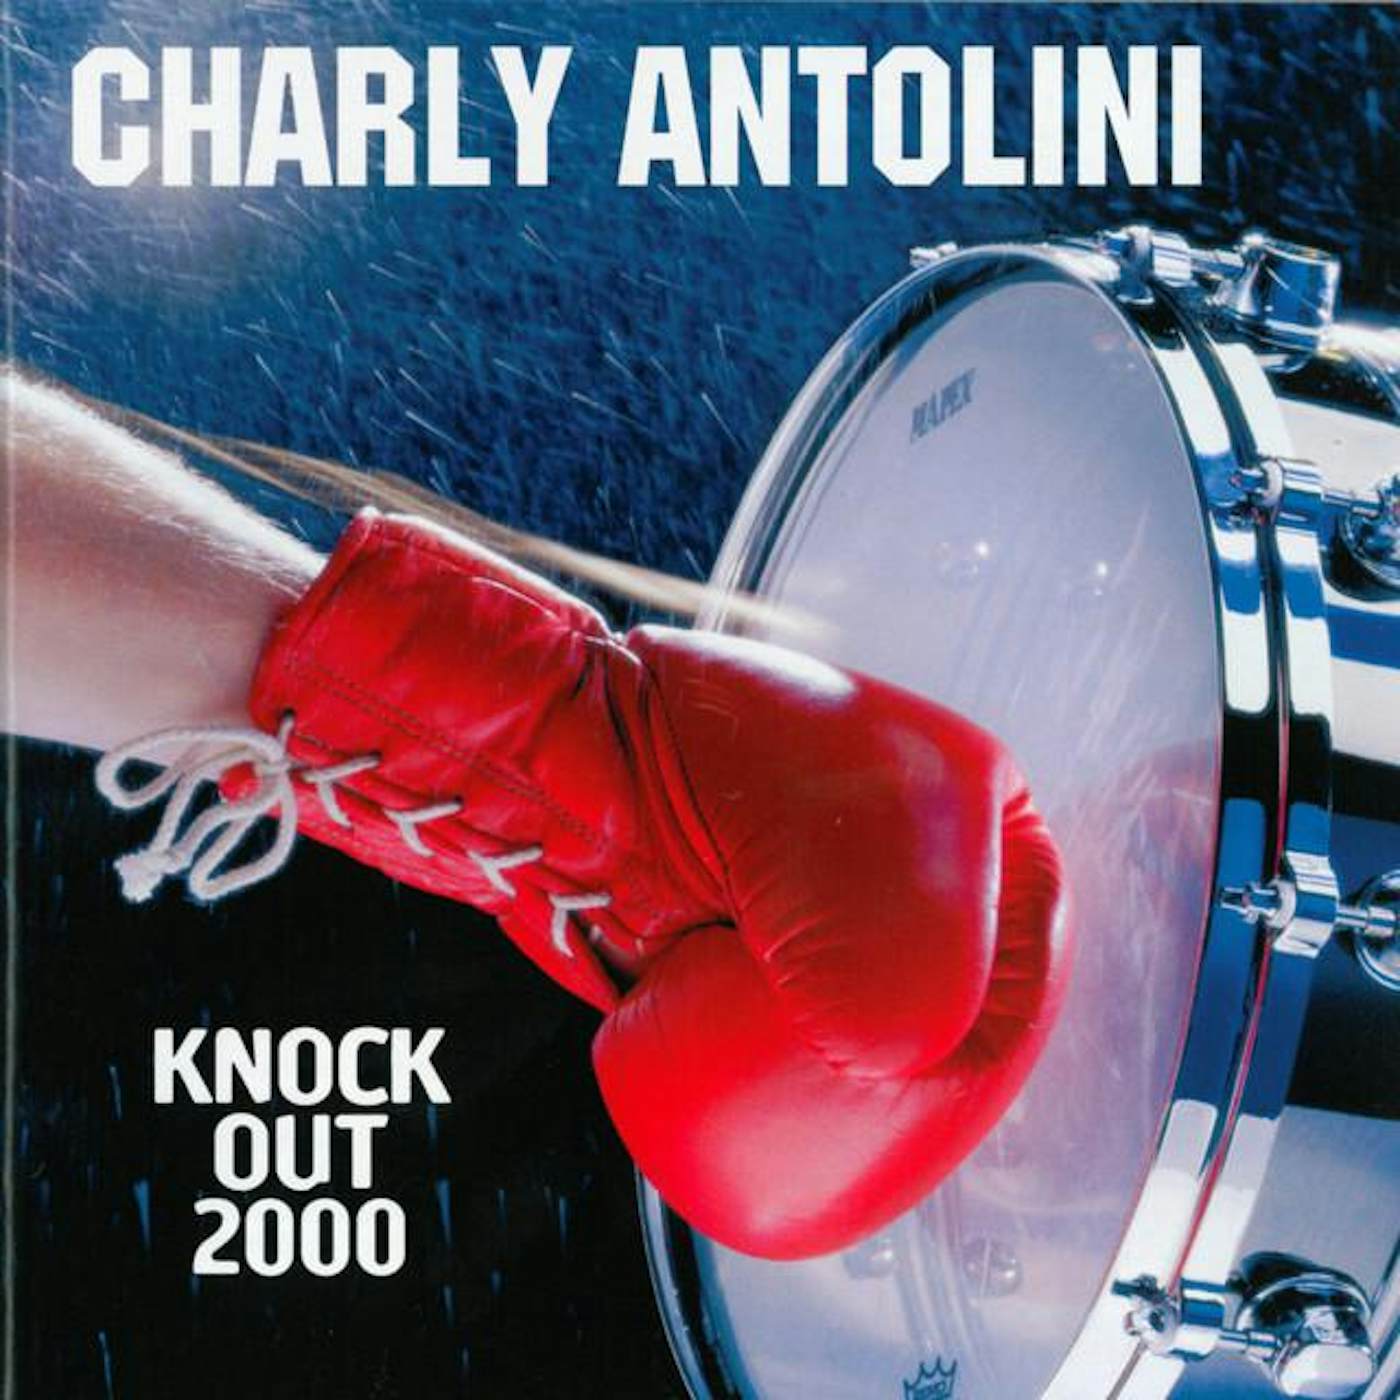 Charly Antolini